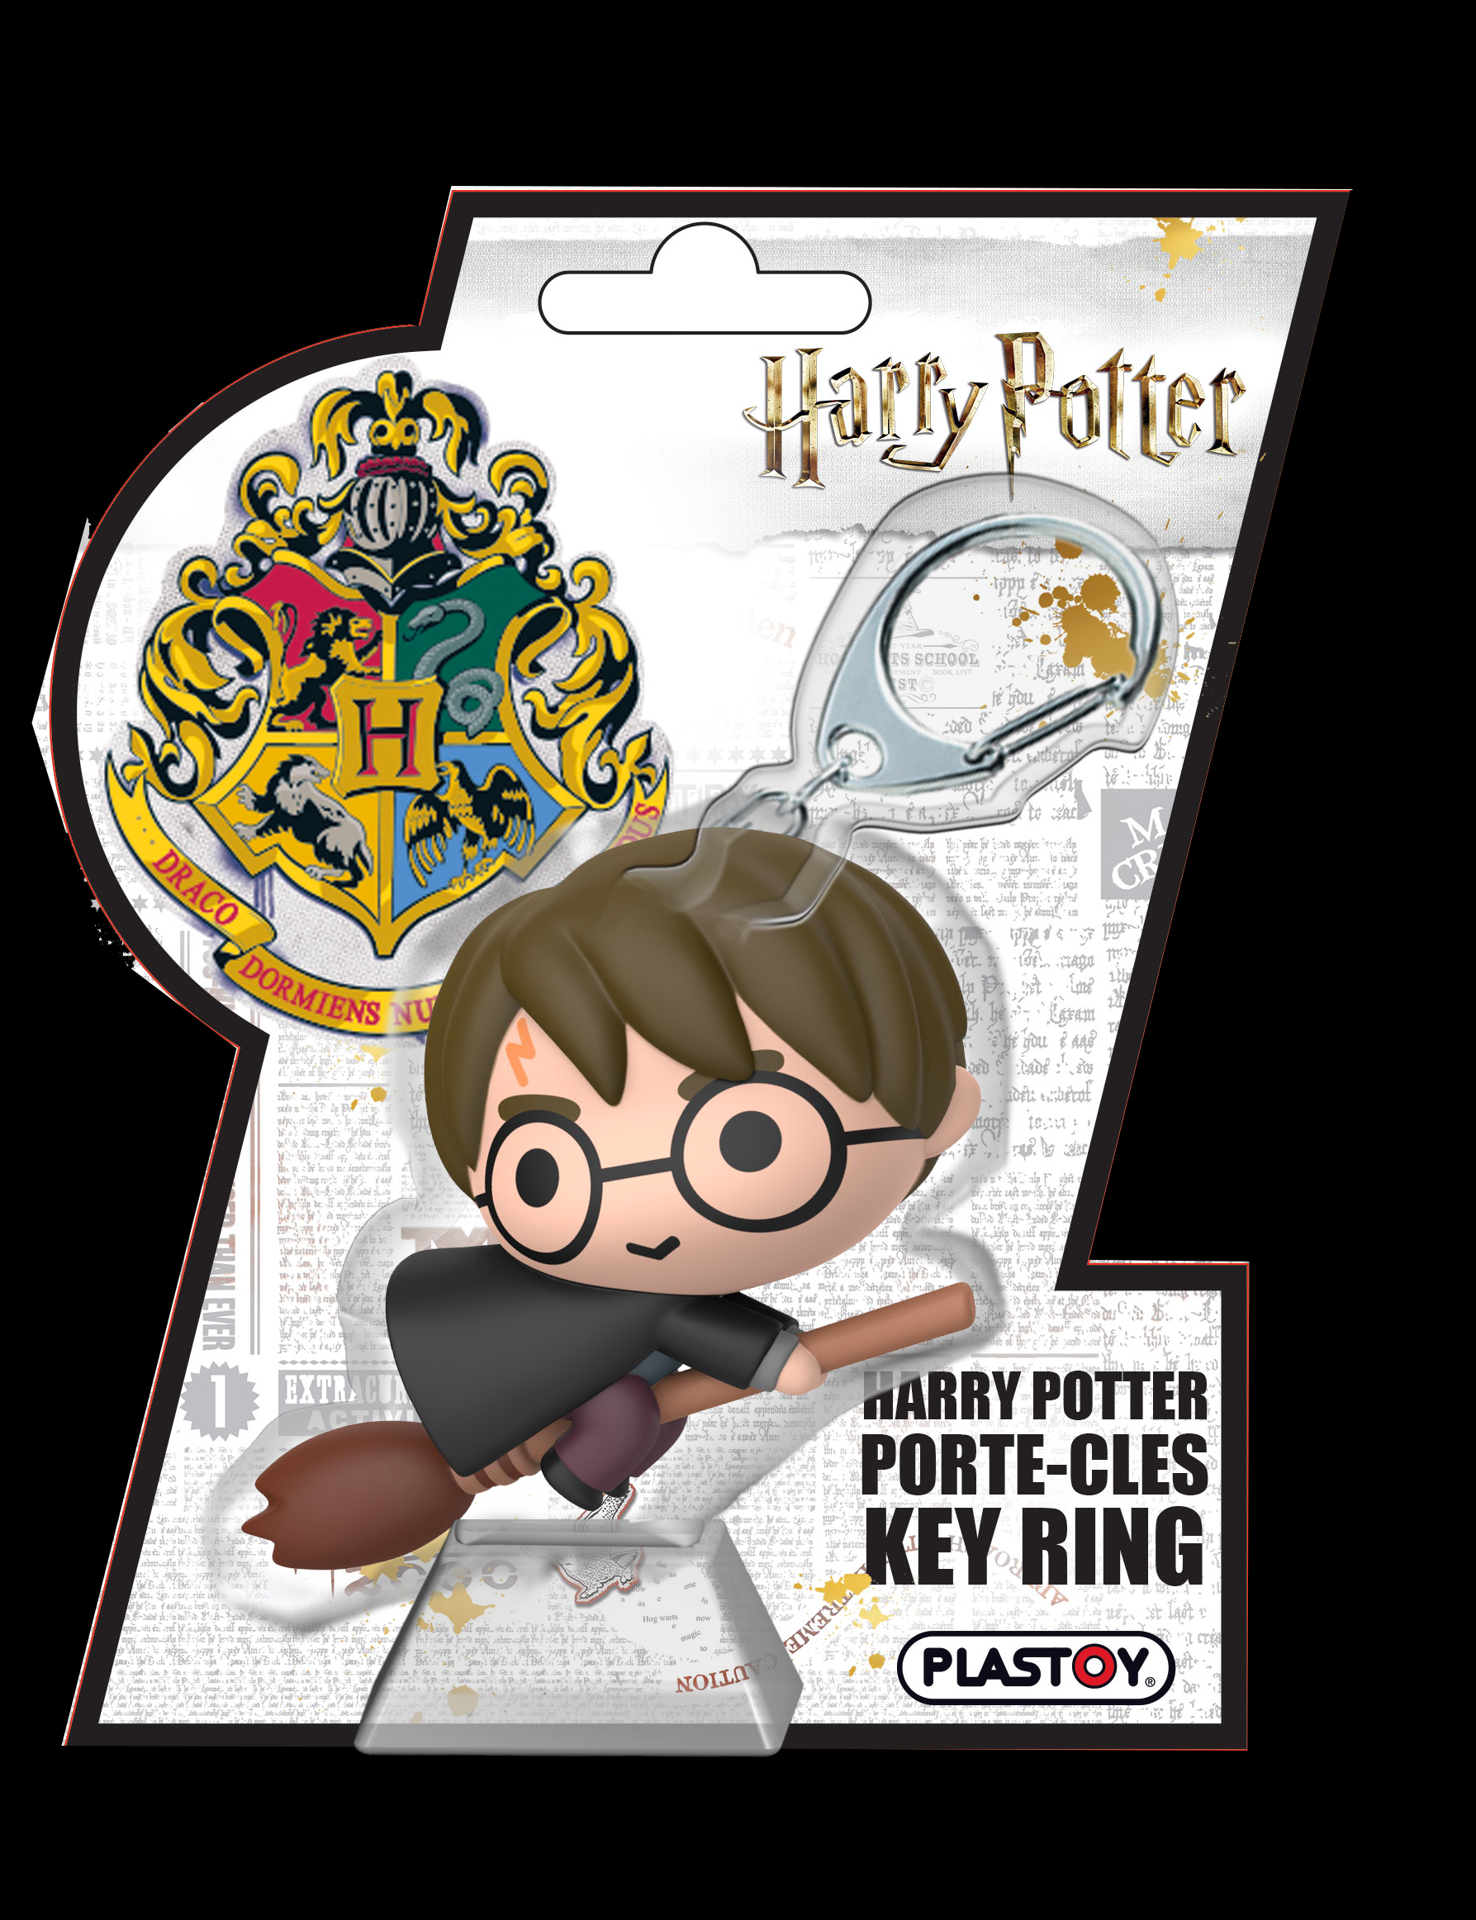 Acheter Plastoy - Porte-clef Harry Potter Chibi Harry Potter - Porte-Clef  prix promo neuf et occasion pas cher